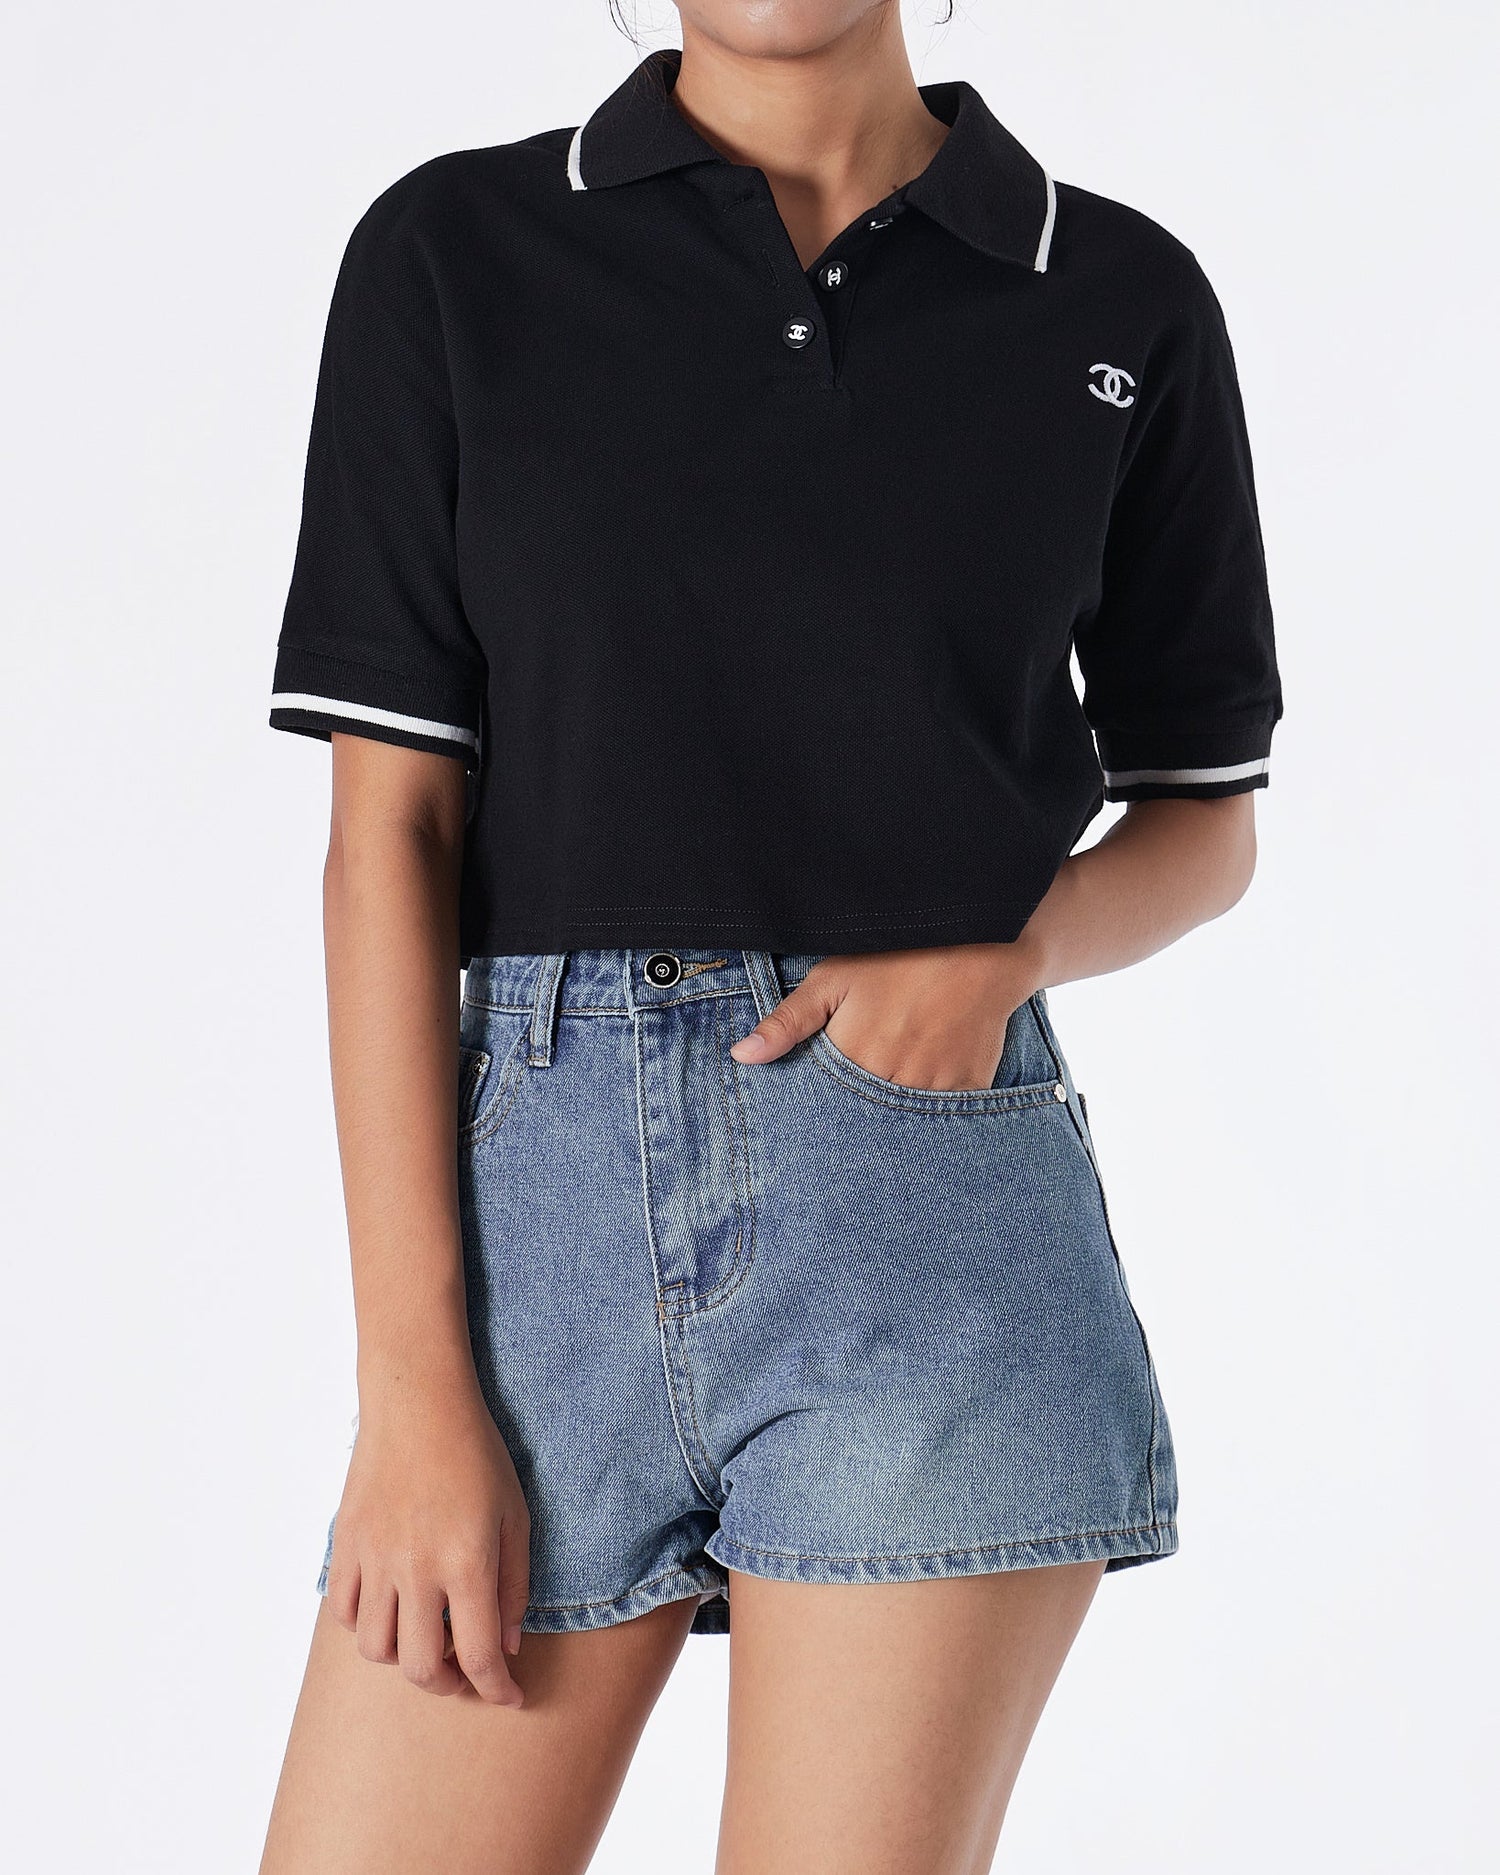 MOI OUTFIT-CC Croptop Lady Black Polo Shirt 55.90